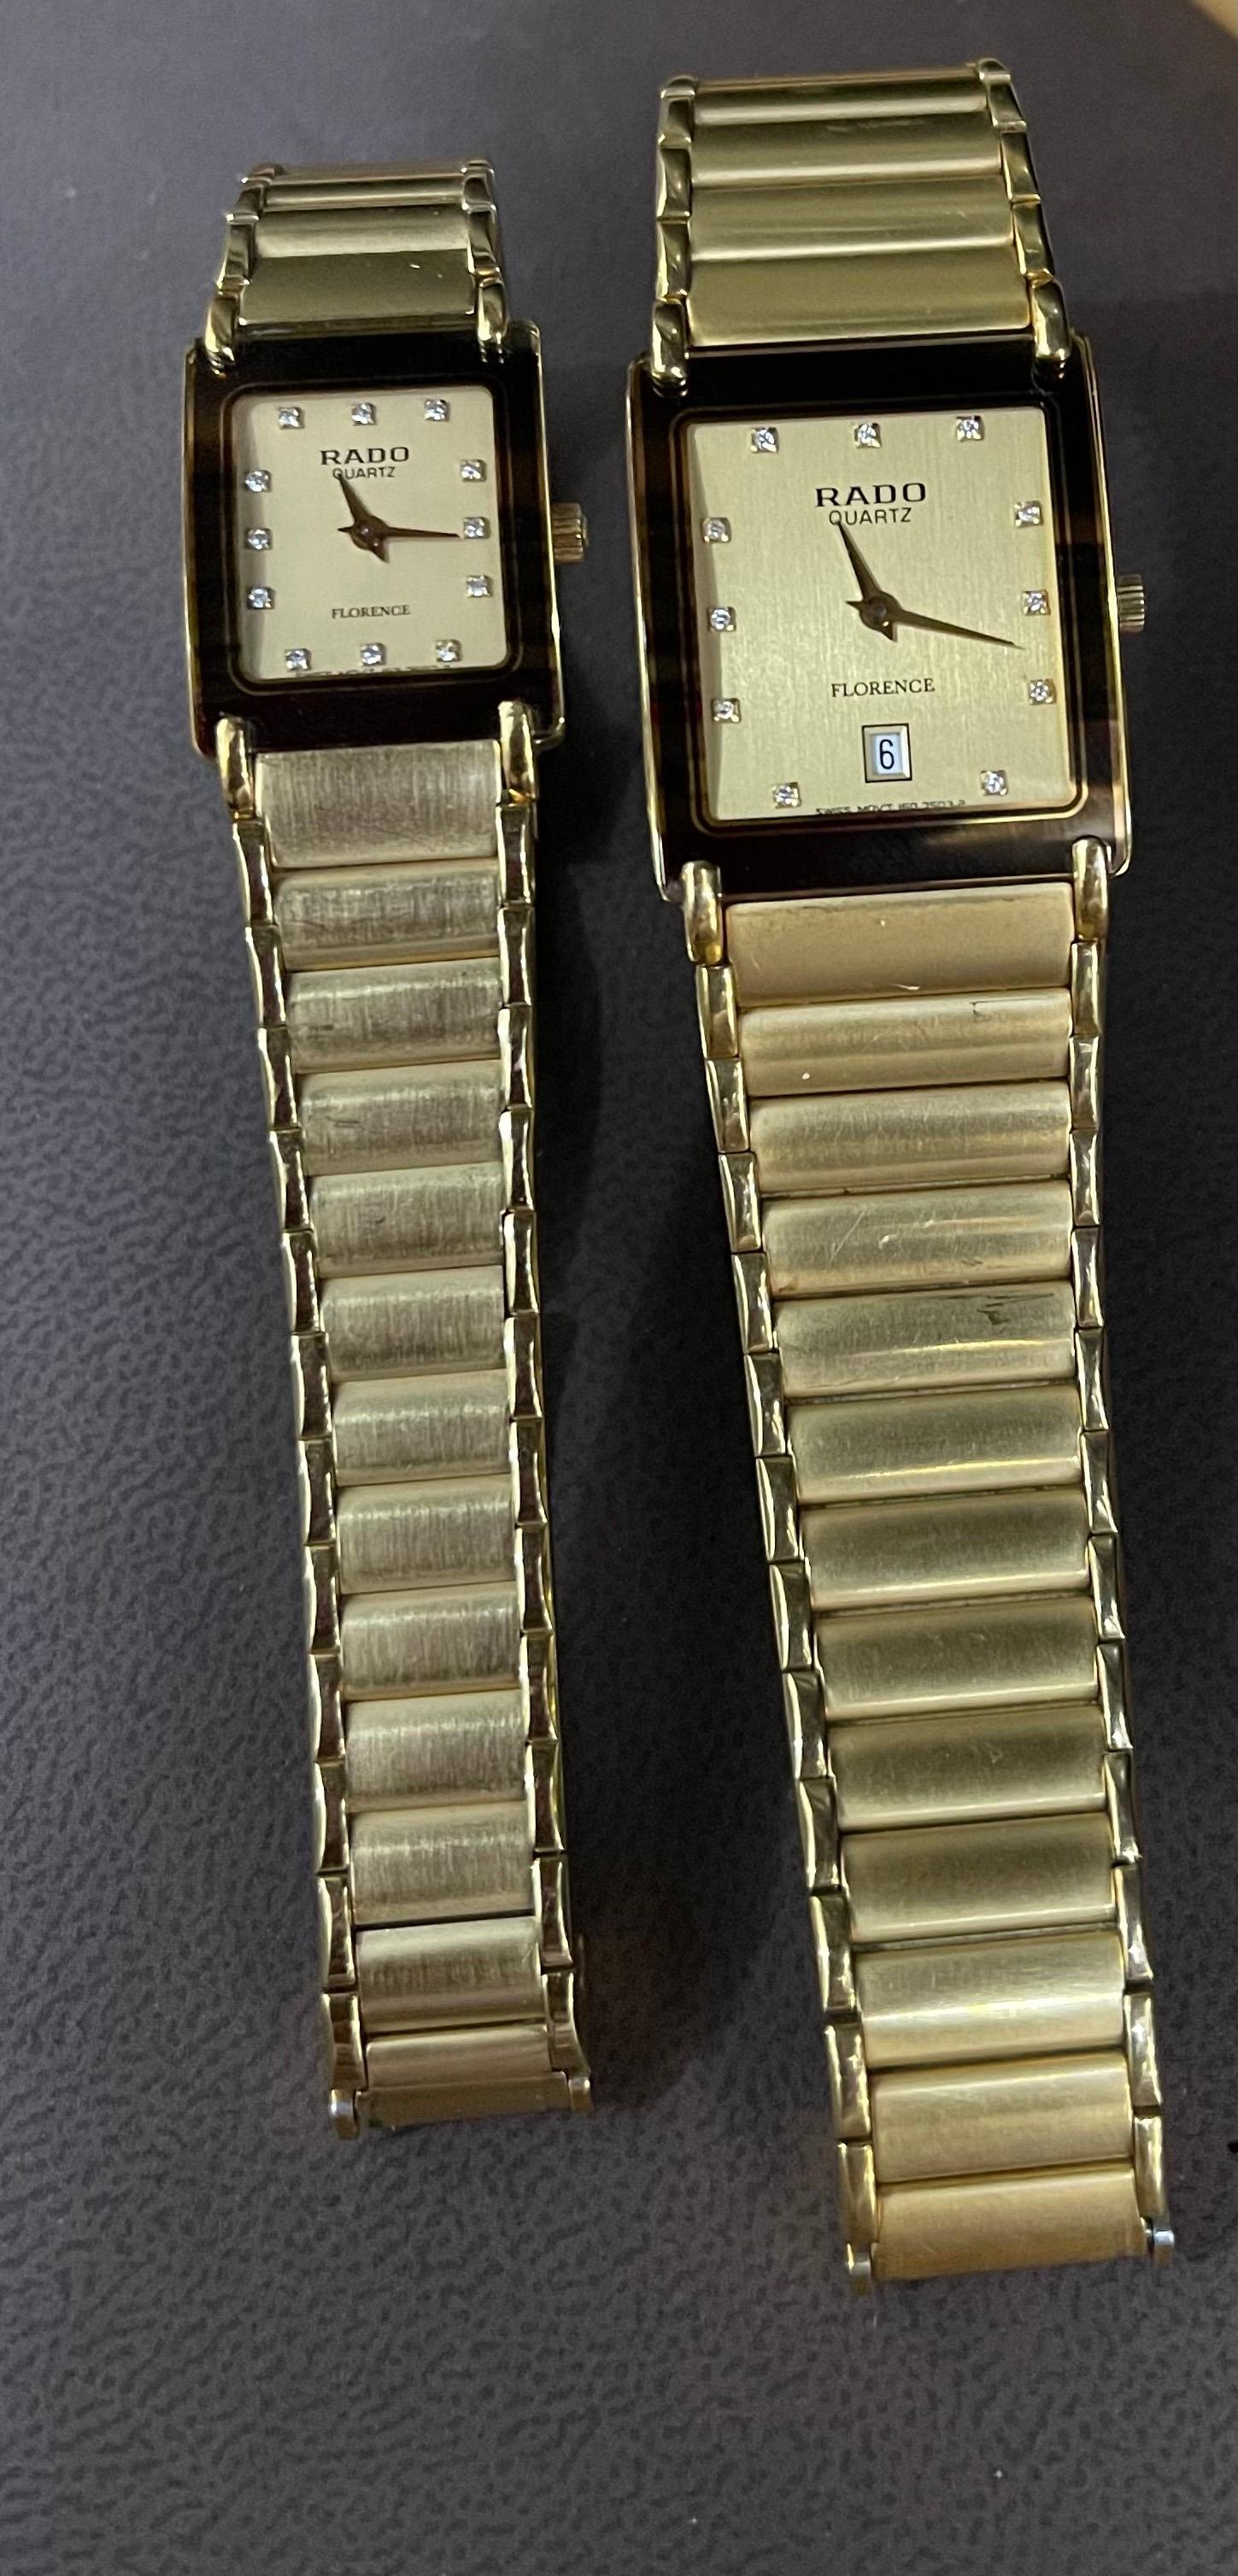 Rado Florence Jubile Men's Quartz, Date Watch 91406, Gold Tone with Box 8